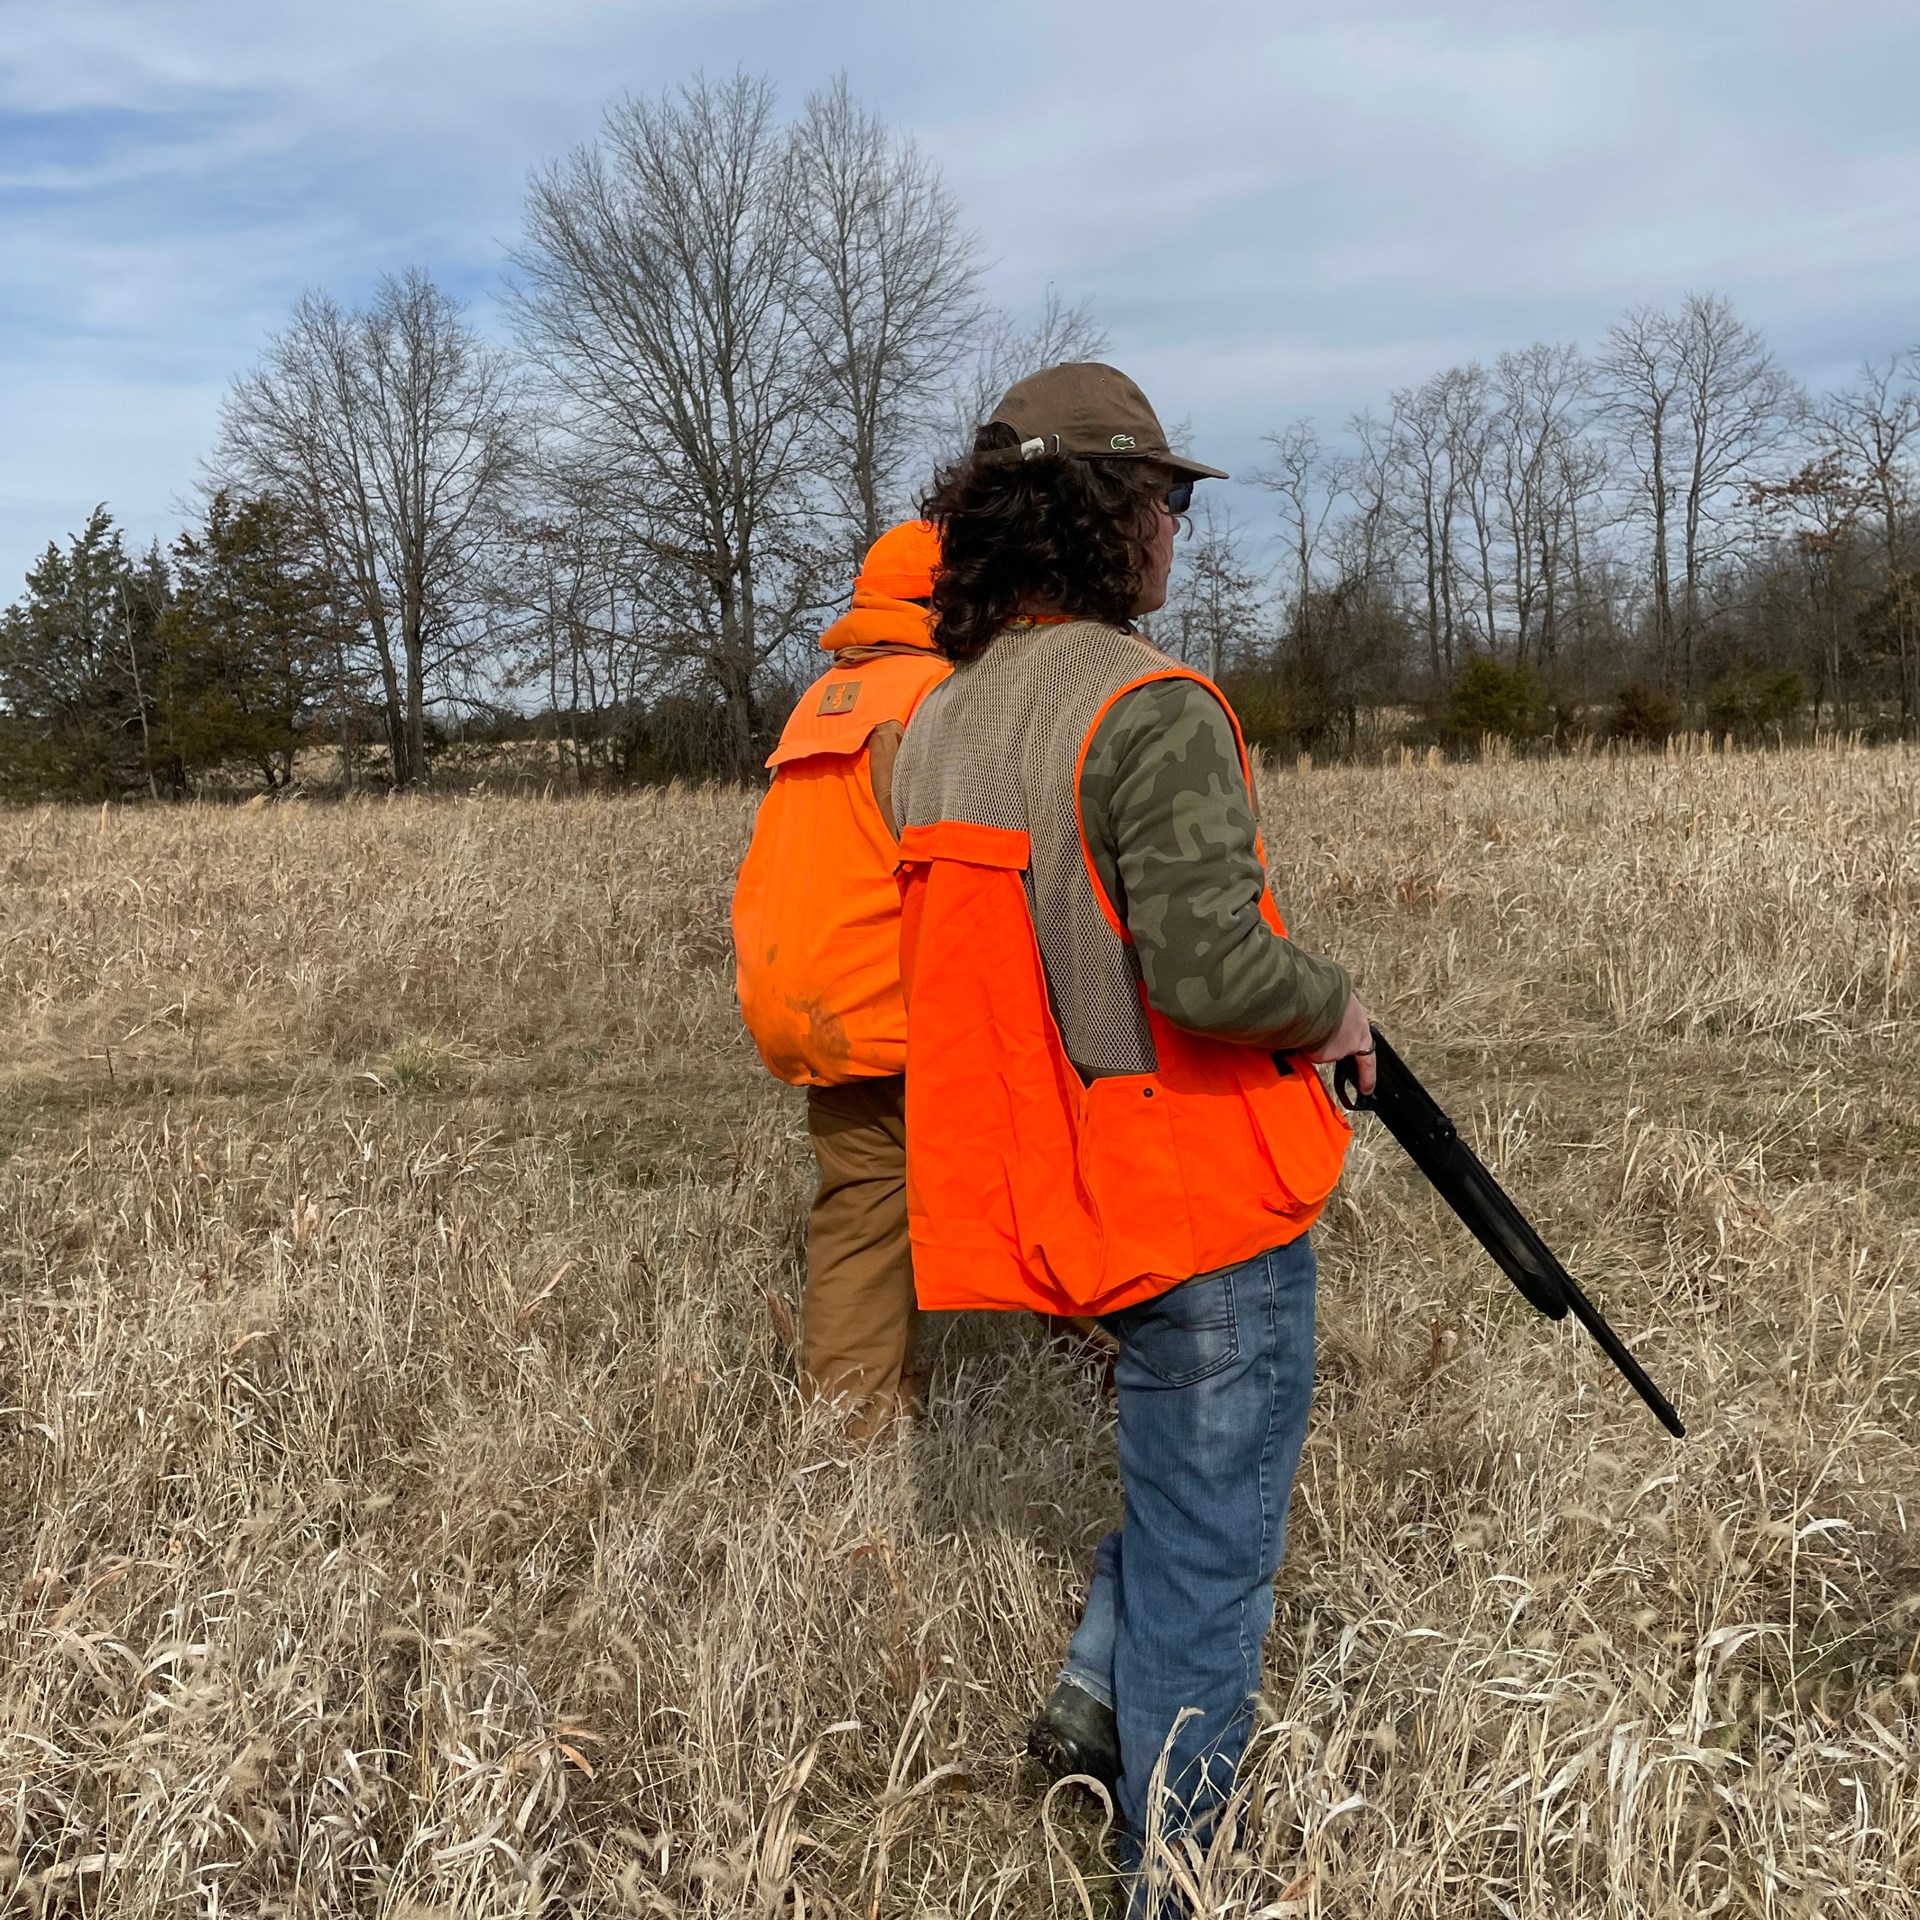 Two hunters in grassy field bird hunting shotgun muzzle direction safety rules blaze orange vest blue sky clouds trees black gun